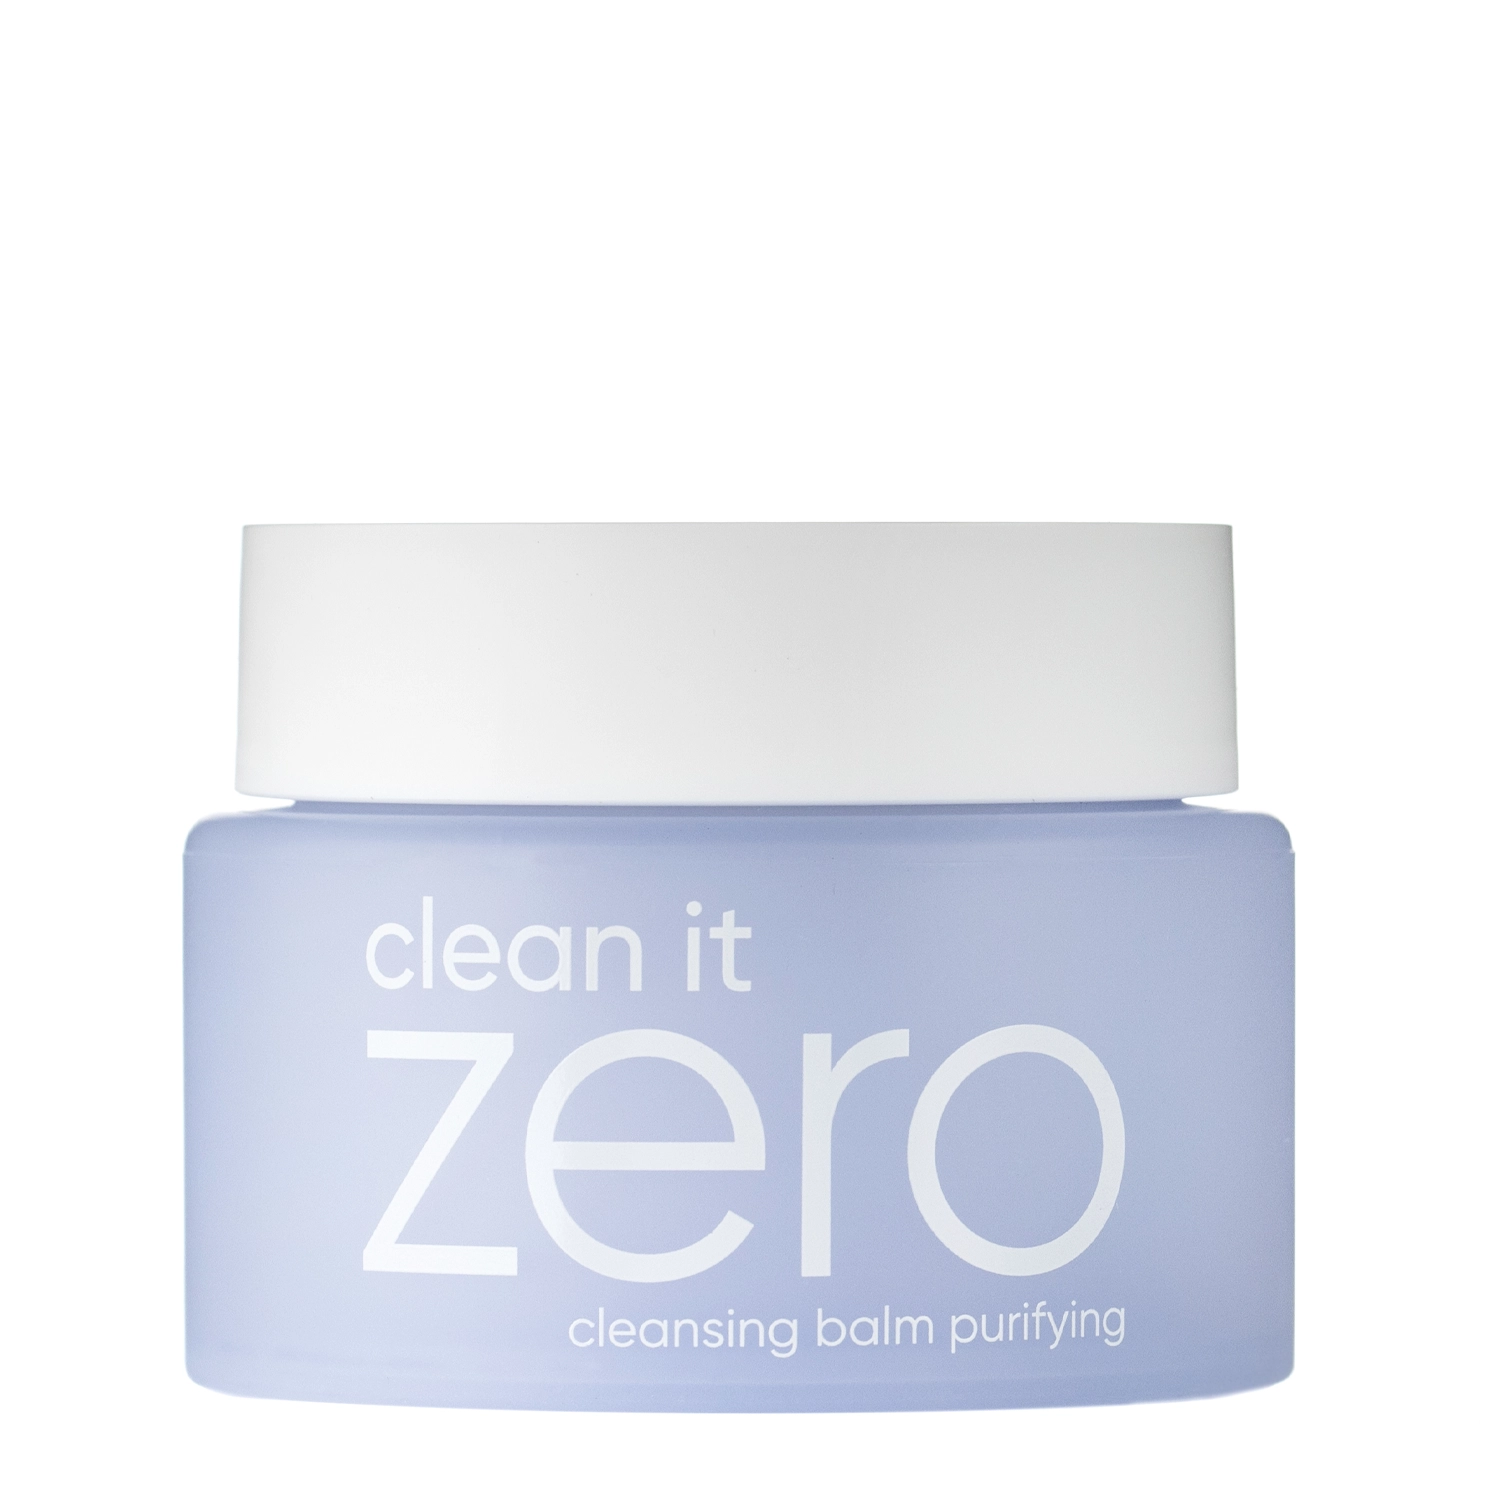 Banila Co - Очищающий бальзам для чувствительной кожи - Clean It Zero Cleansing Balm - Purifying - 100ml